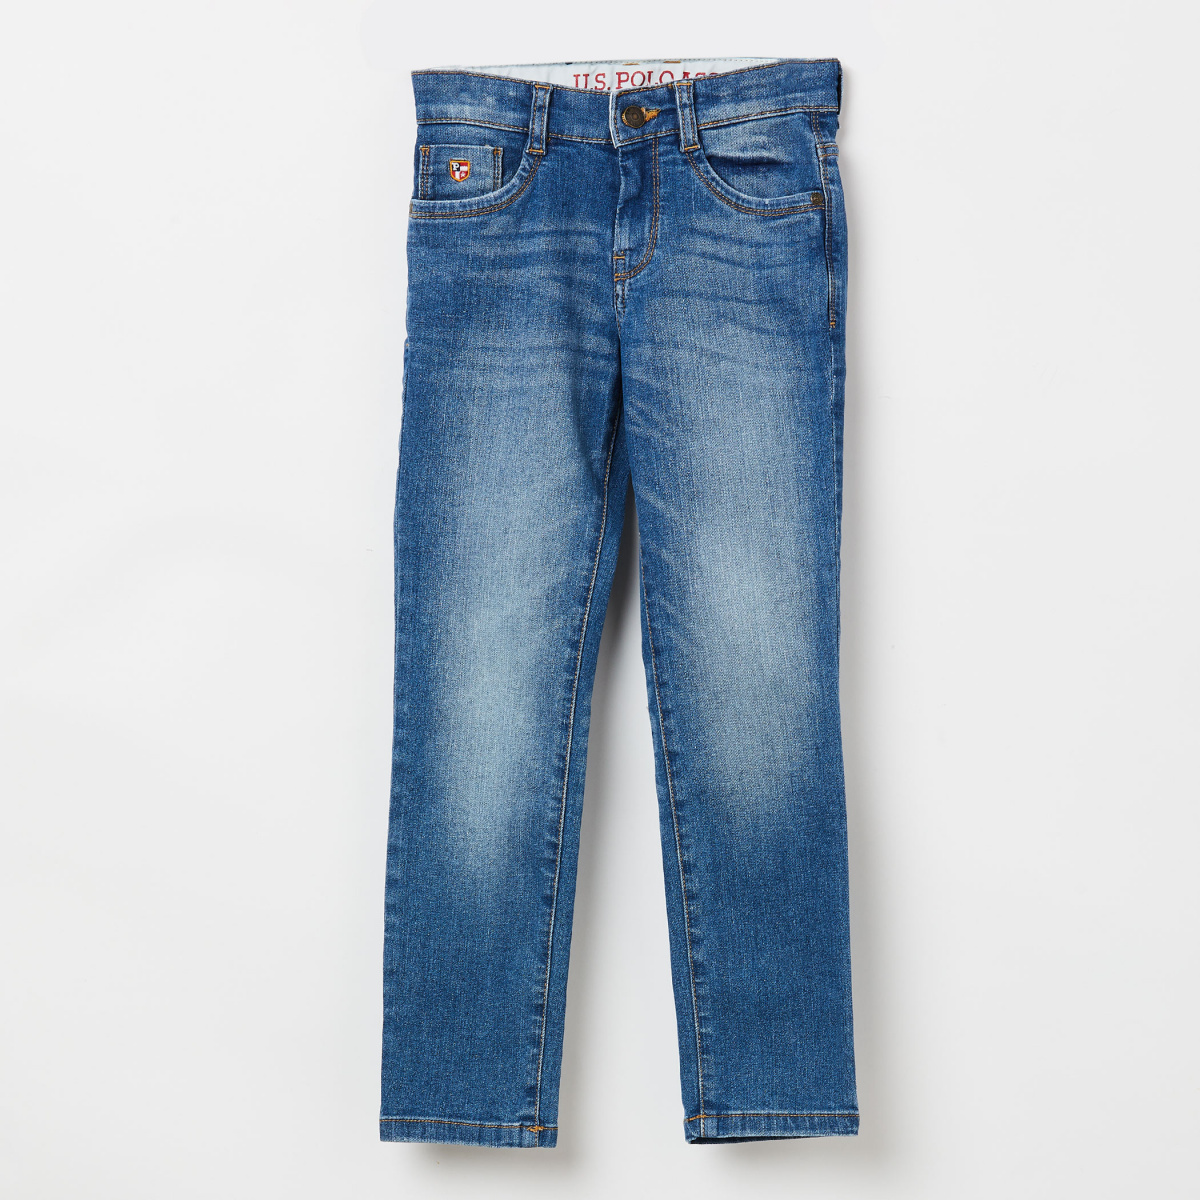 U.S. POLO ASSN. KIDS Stonewashed Low-Rise Jeans